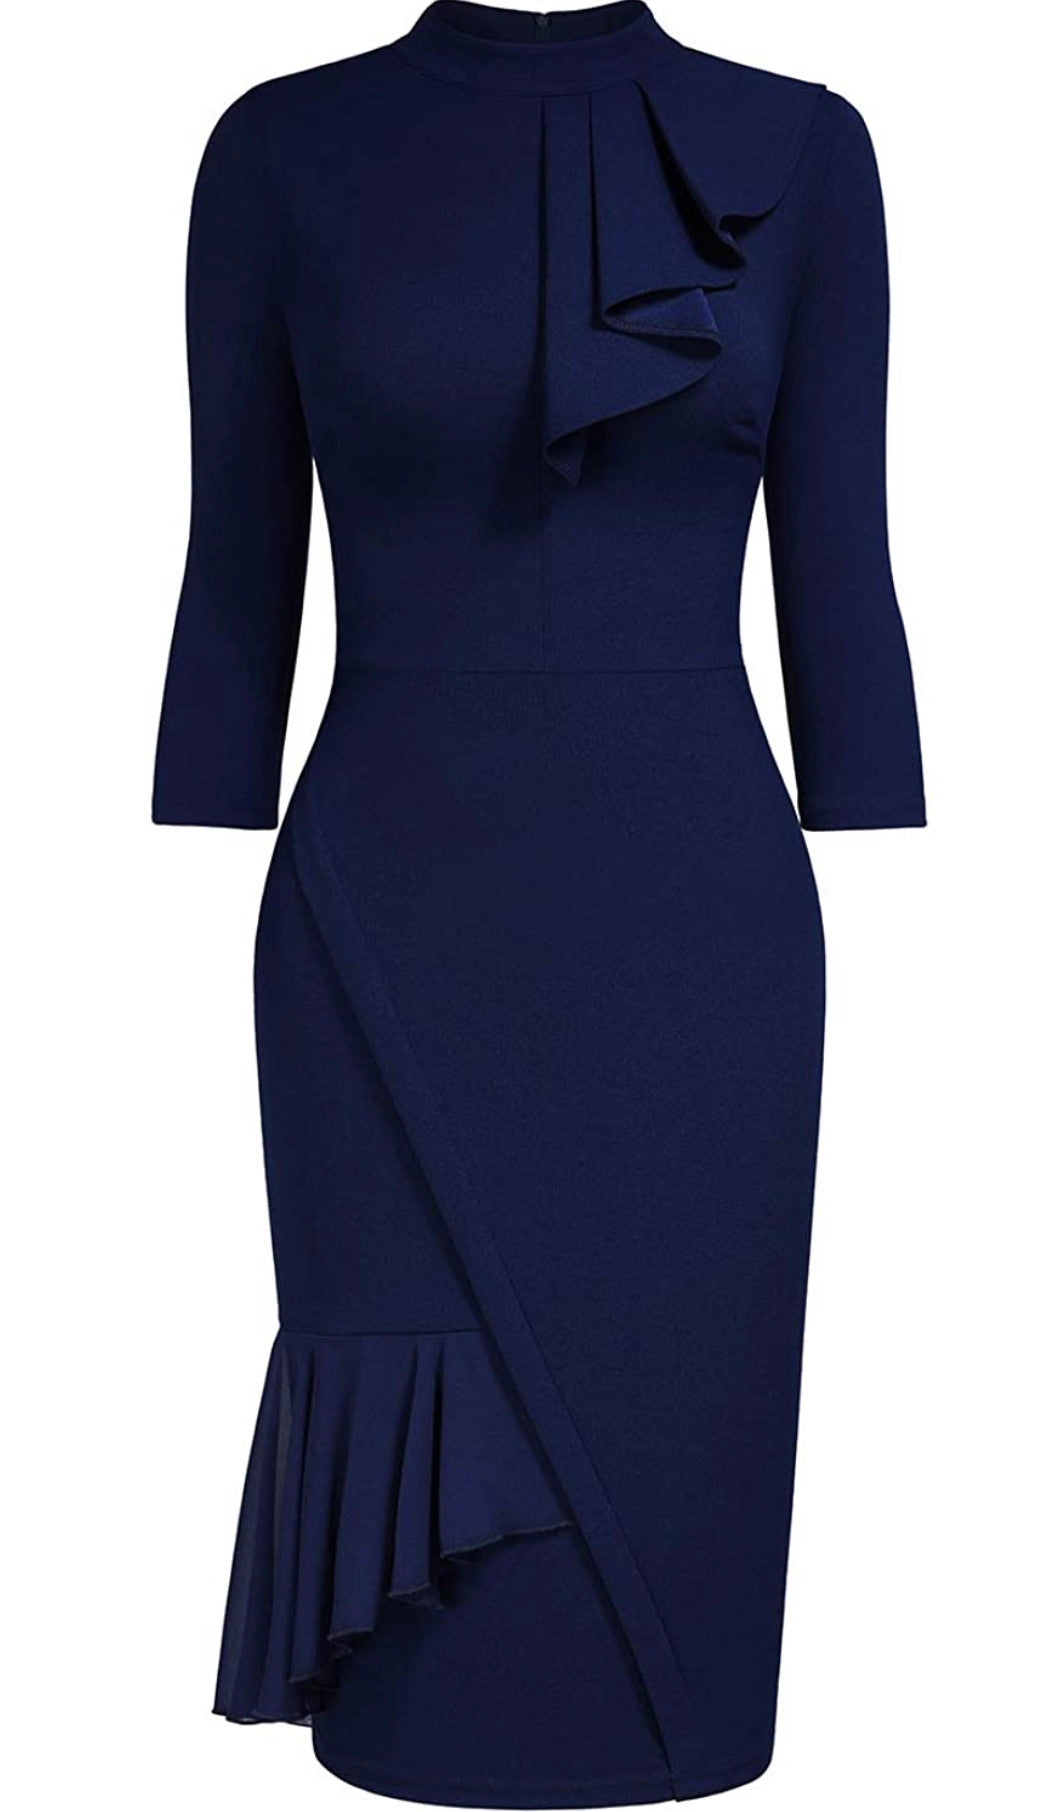 Vintage Inspired Pencil Dress, Sizes US 4 - 18 (Dark Blue) – Uylee's ...